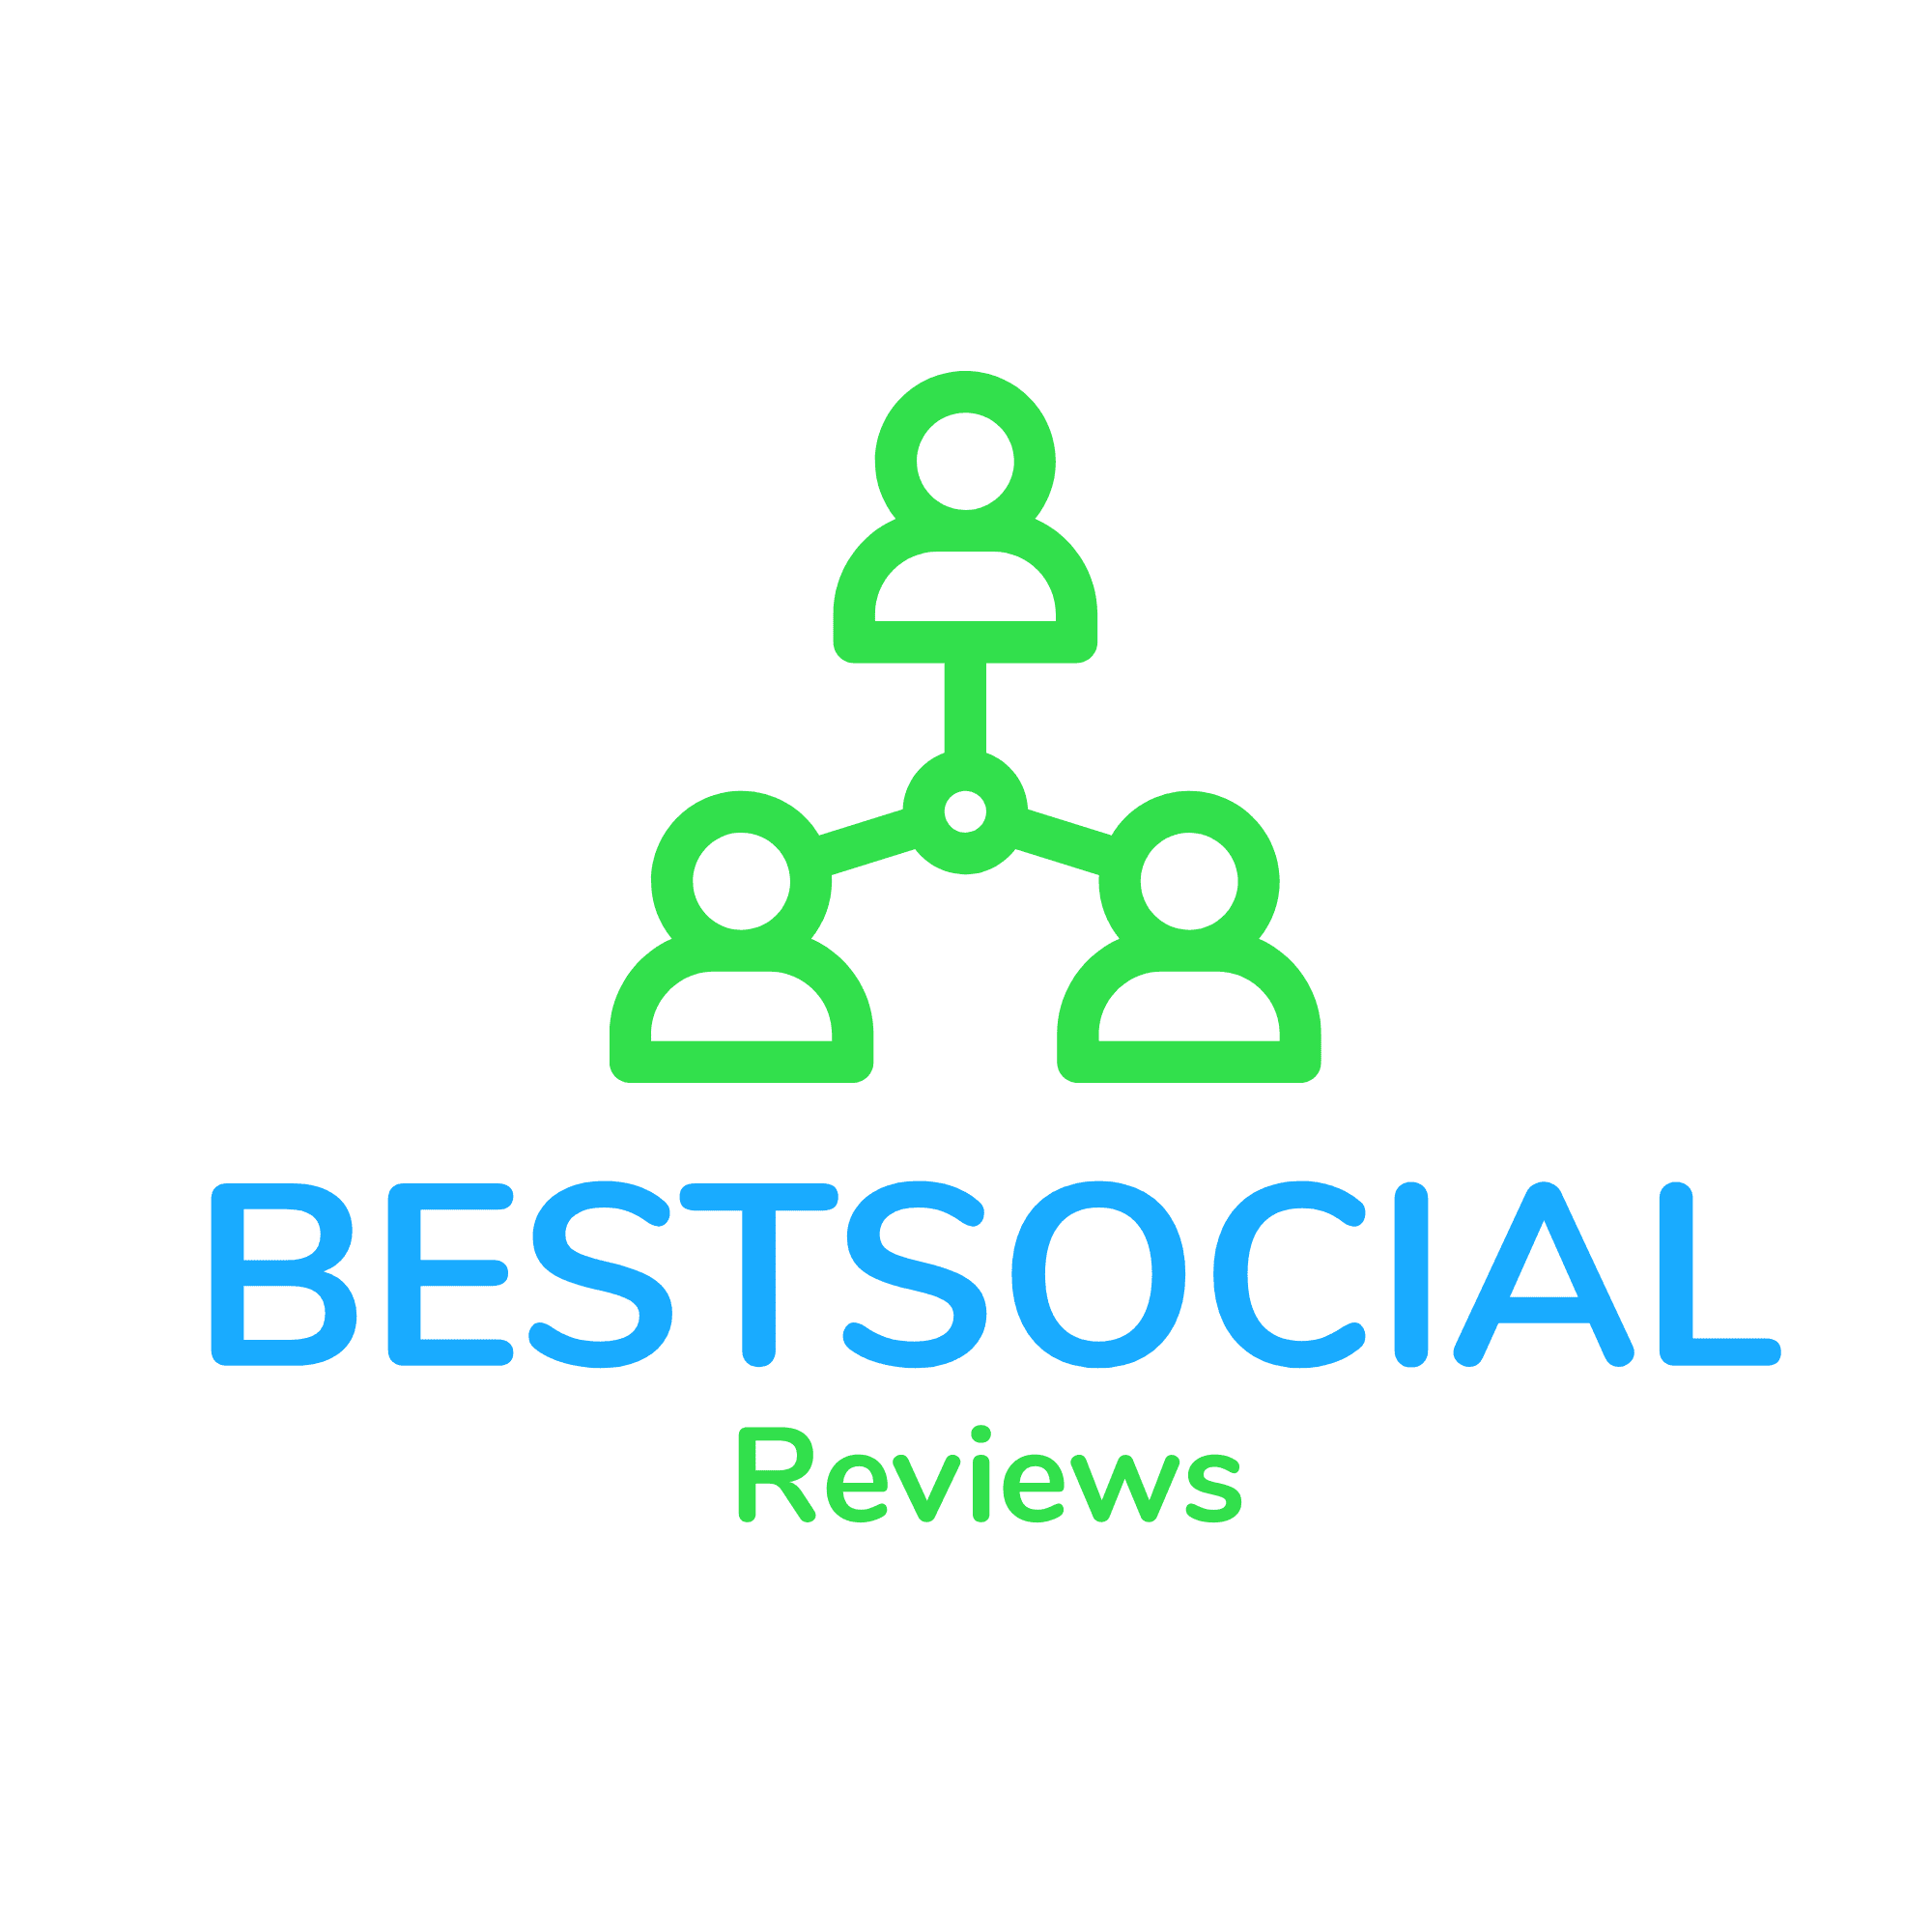 Best Social Reviews